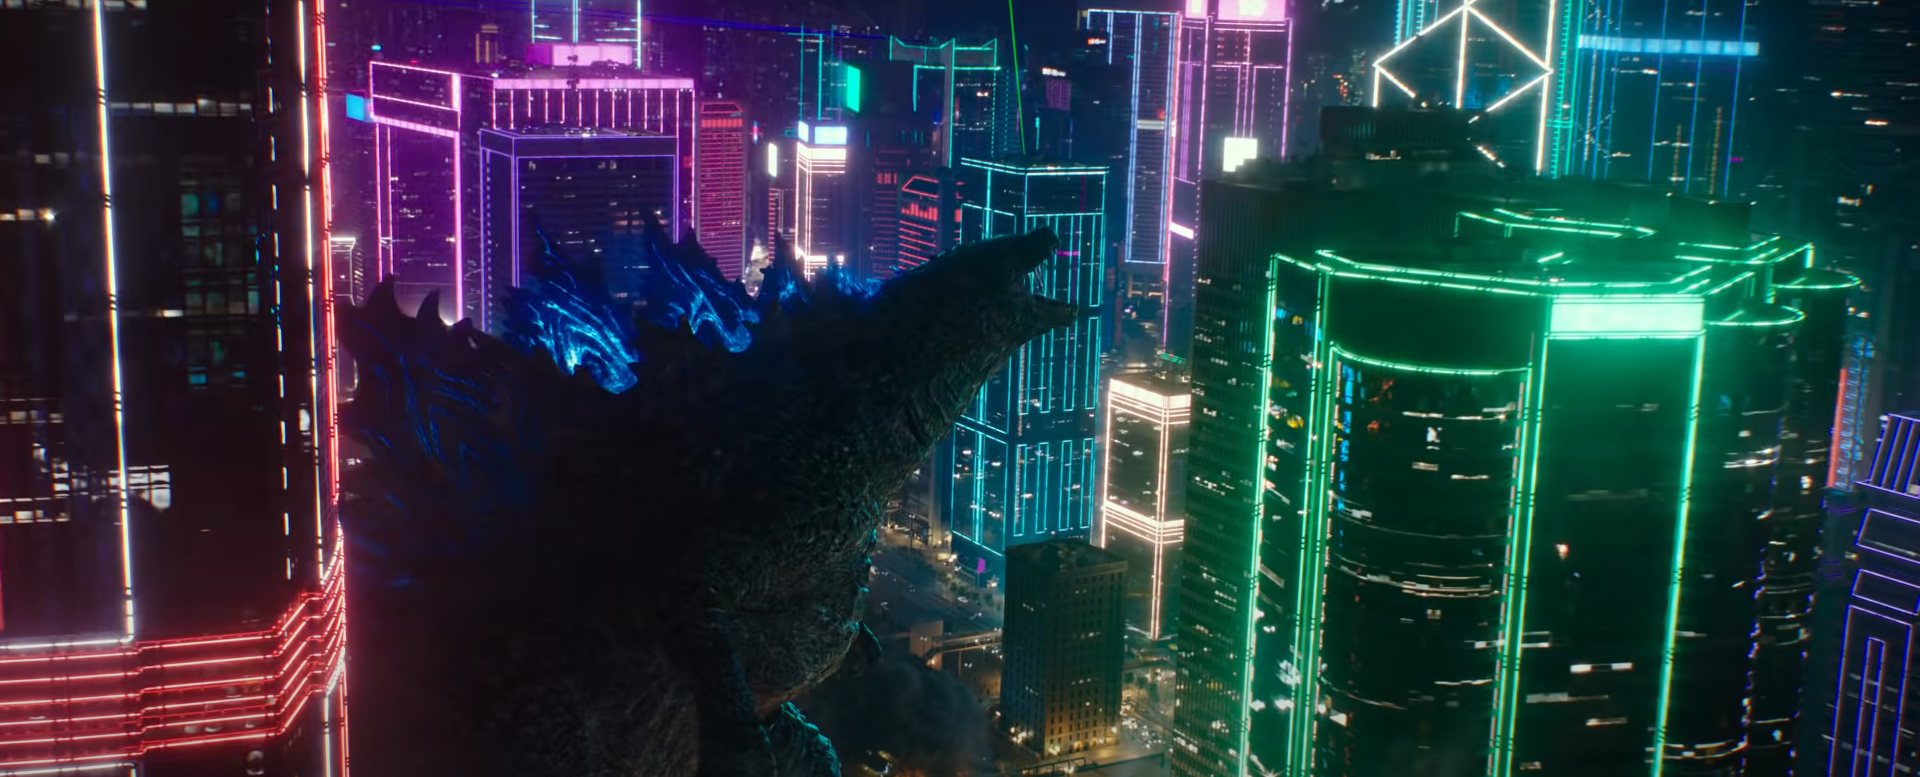 Godzilla walks through Hong Kong's neon-lit buildings and roars